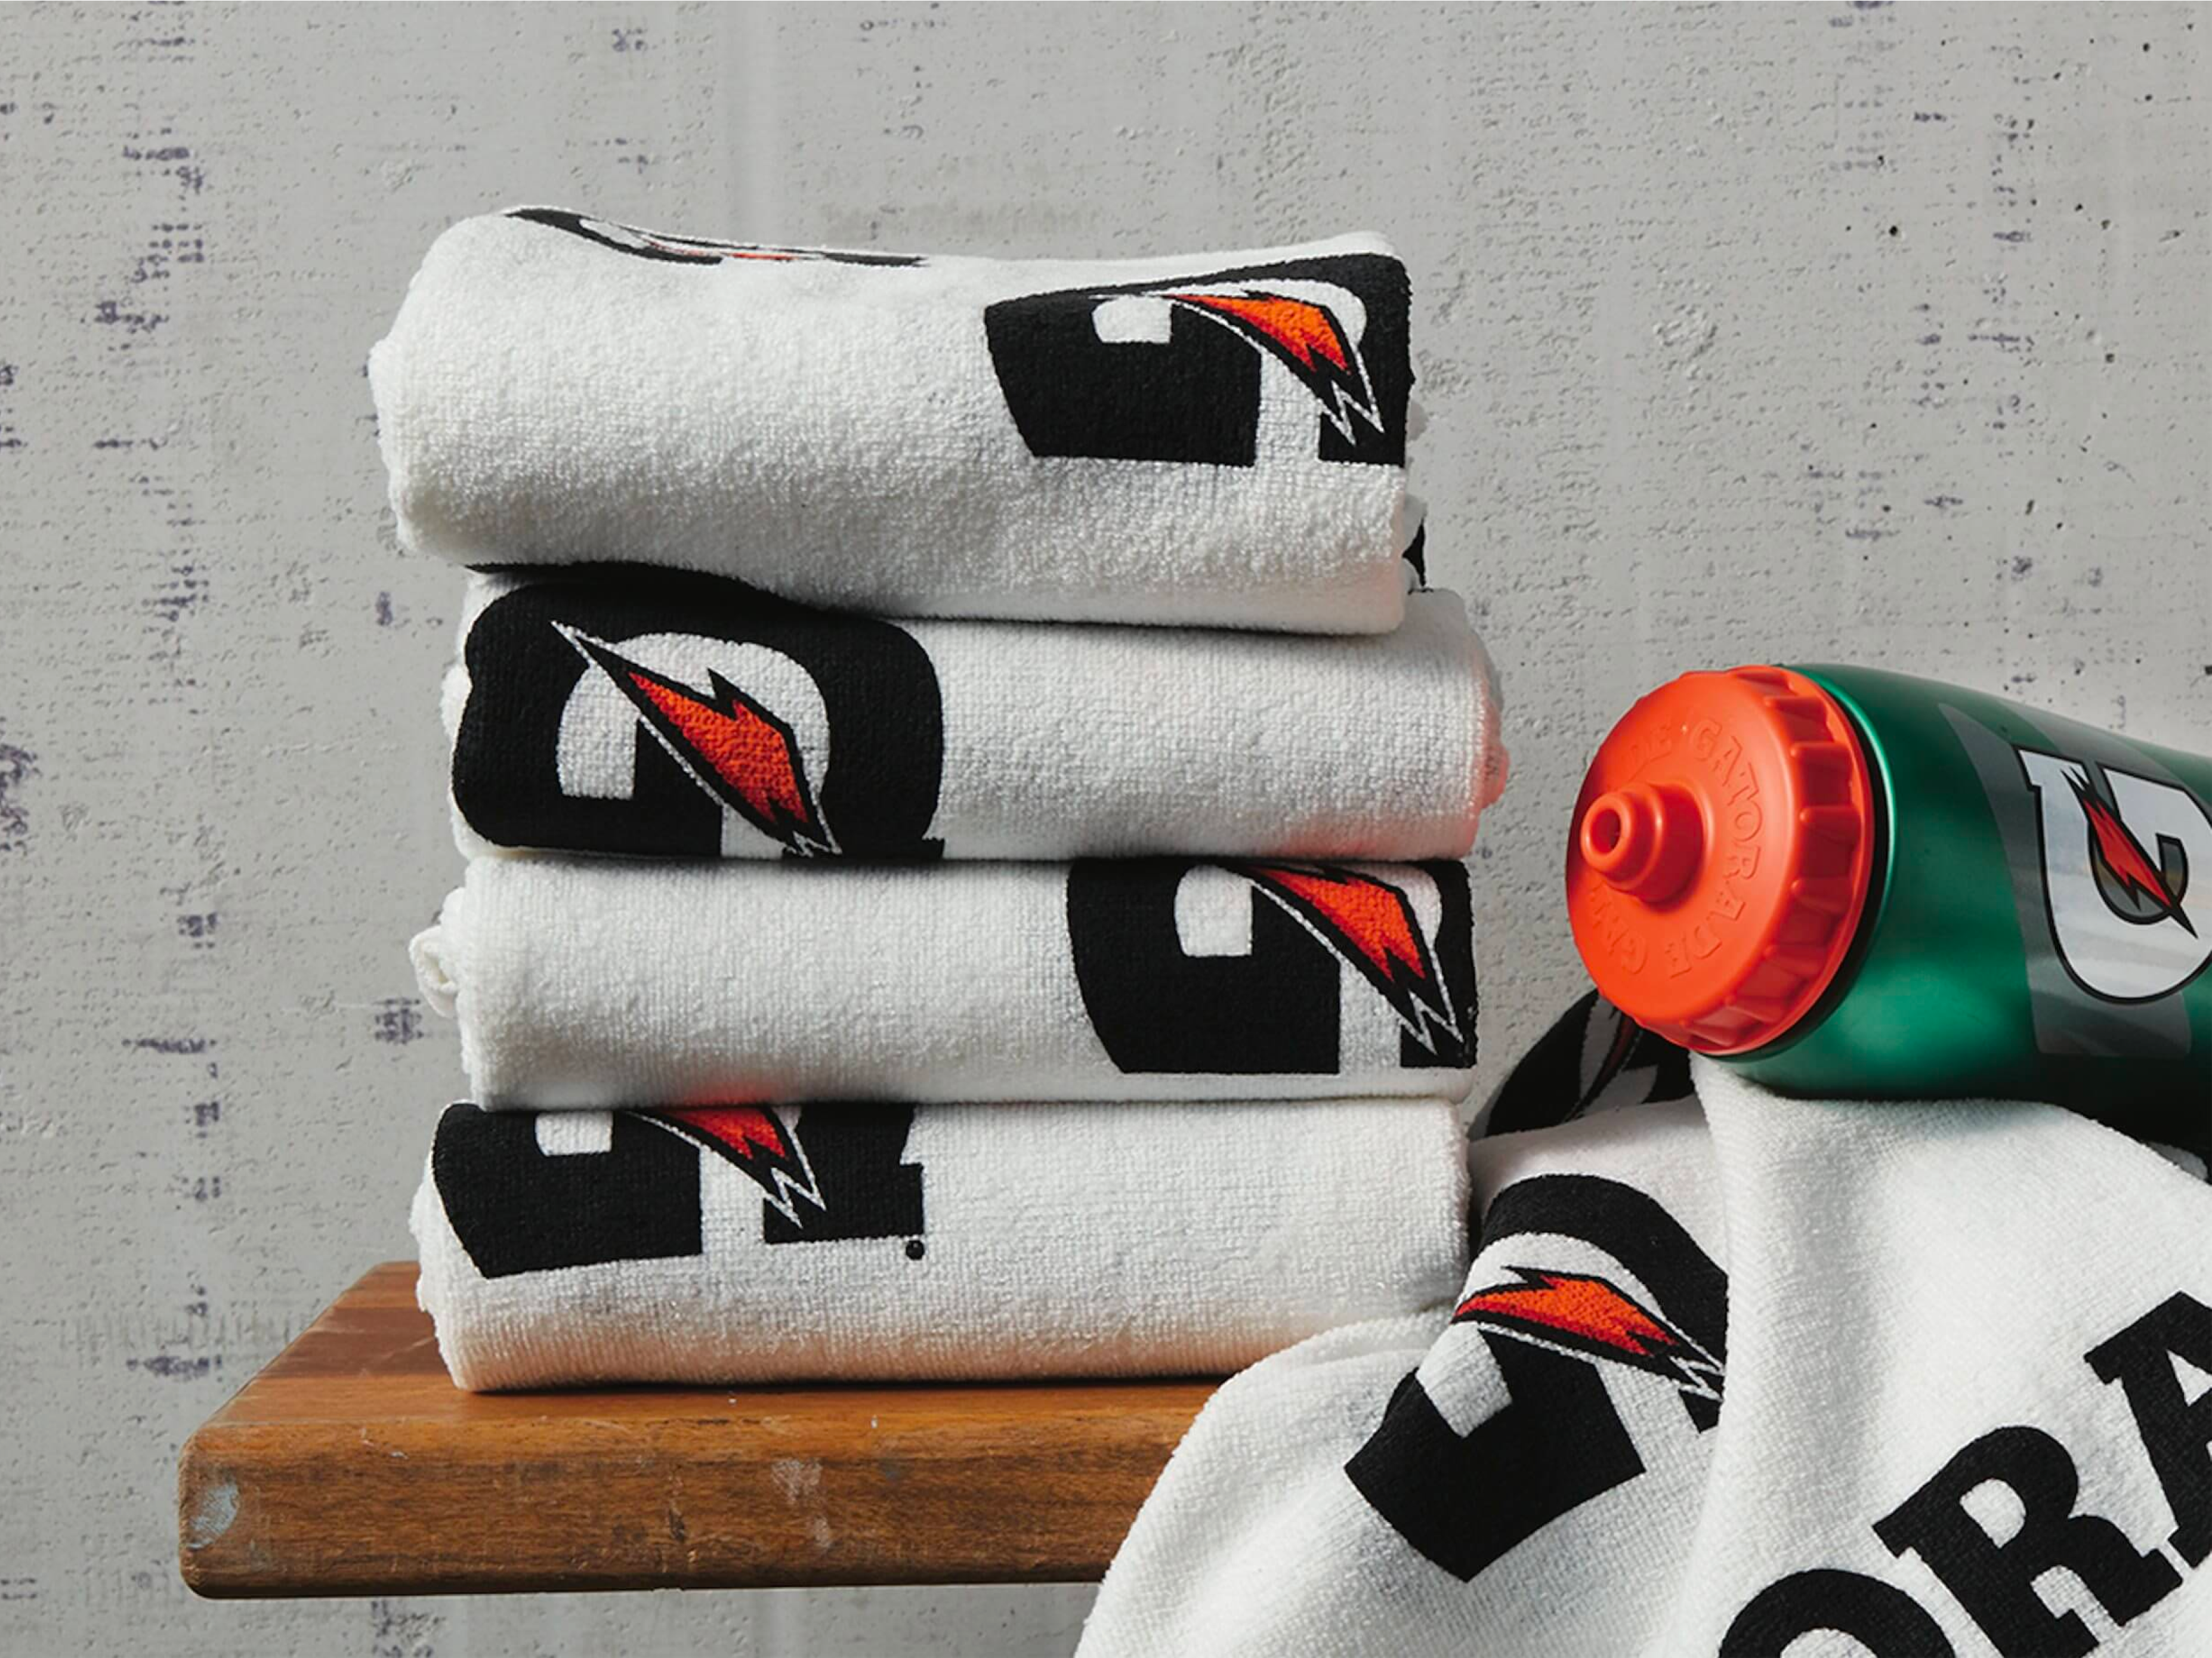 Sideline Gatorade towels on a bench